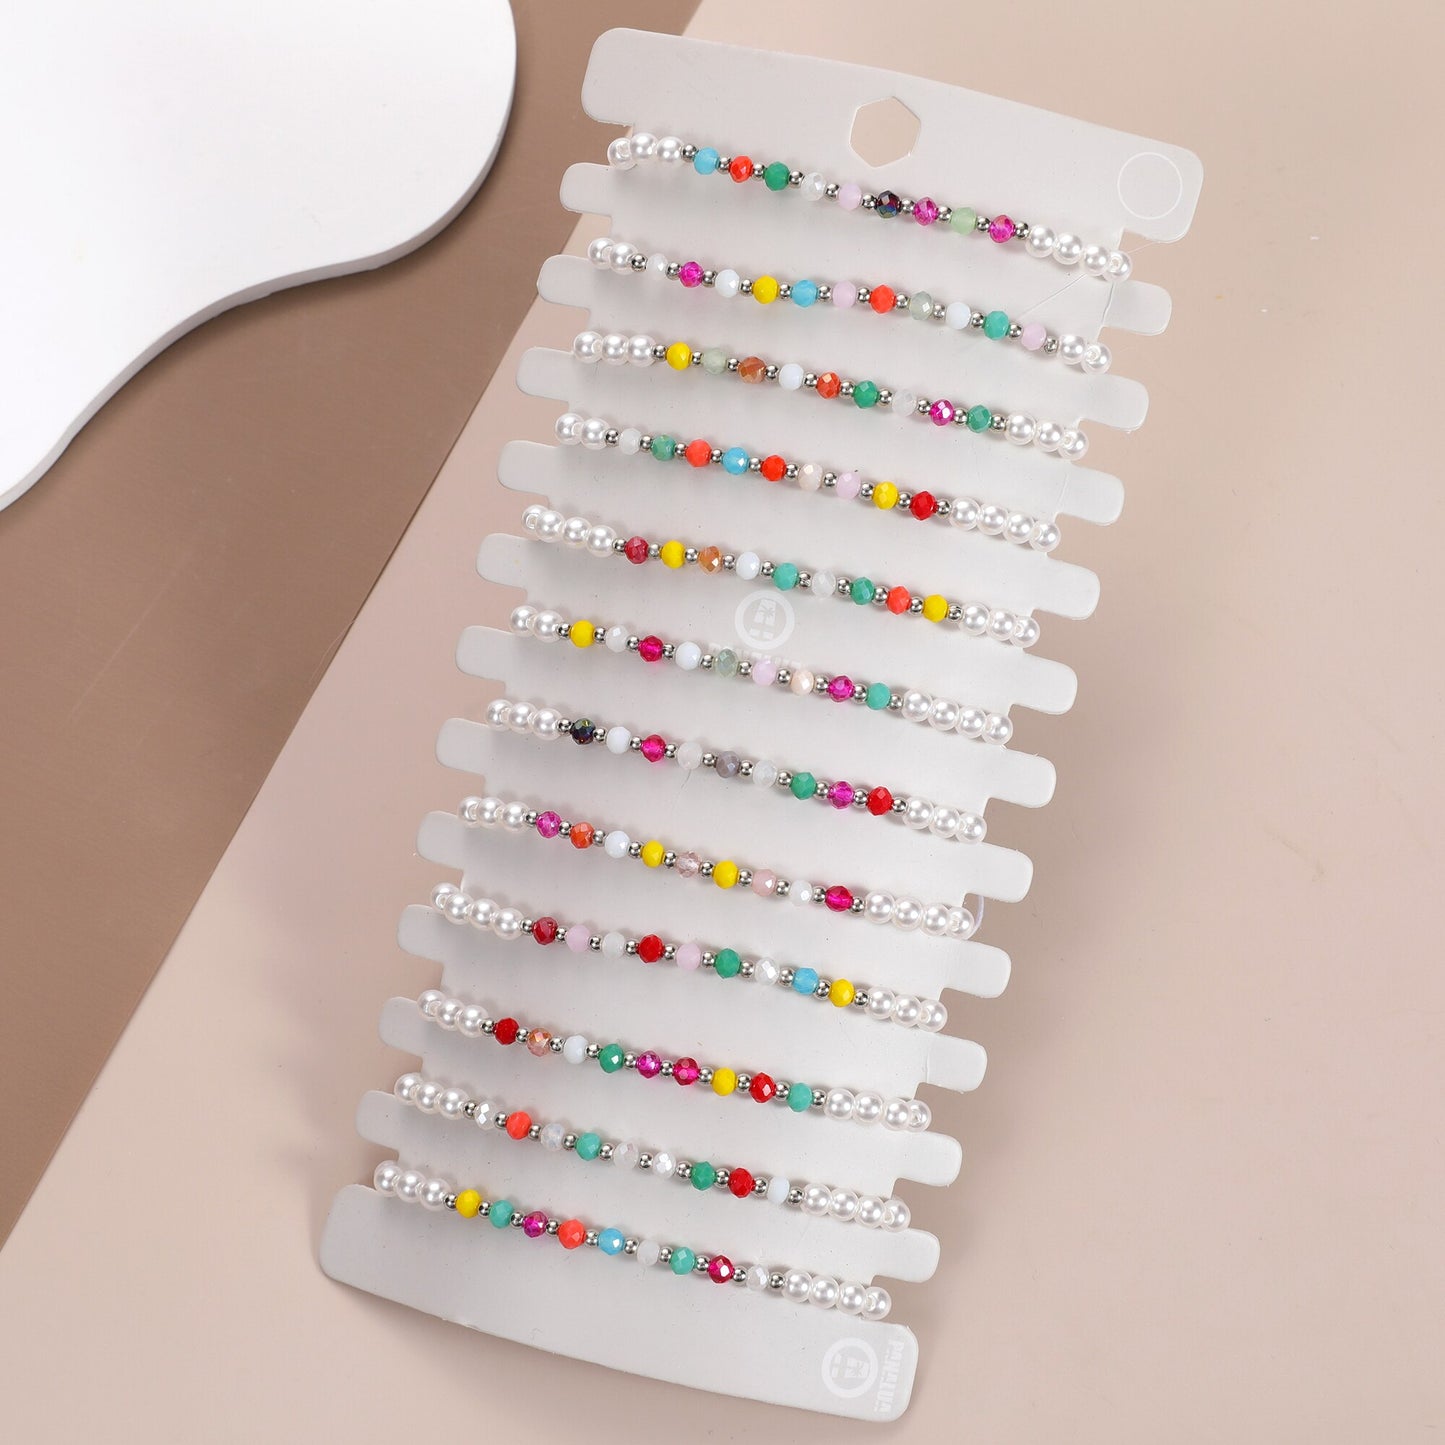 12Pcs Colorful Glass Beads Seashell Handmade Bracelet for Women Men Strand Pearl Bracelets Anklets Jewelry Gifts Wholesale